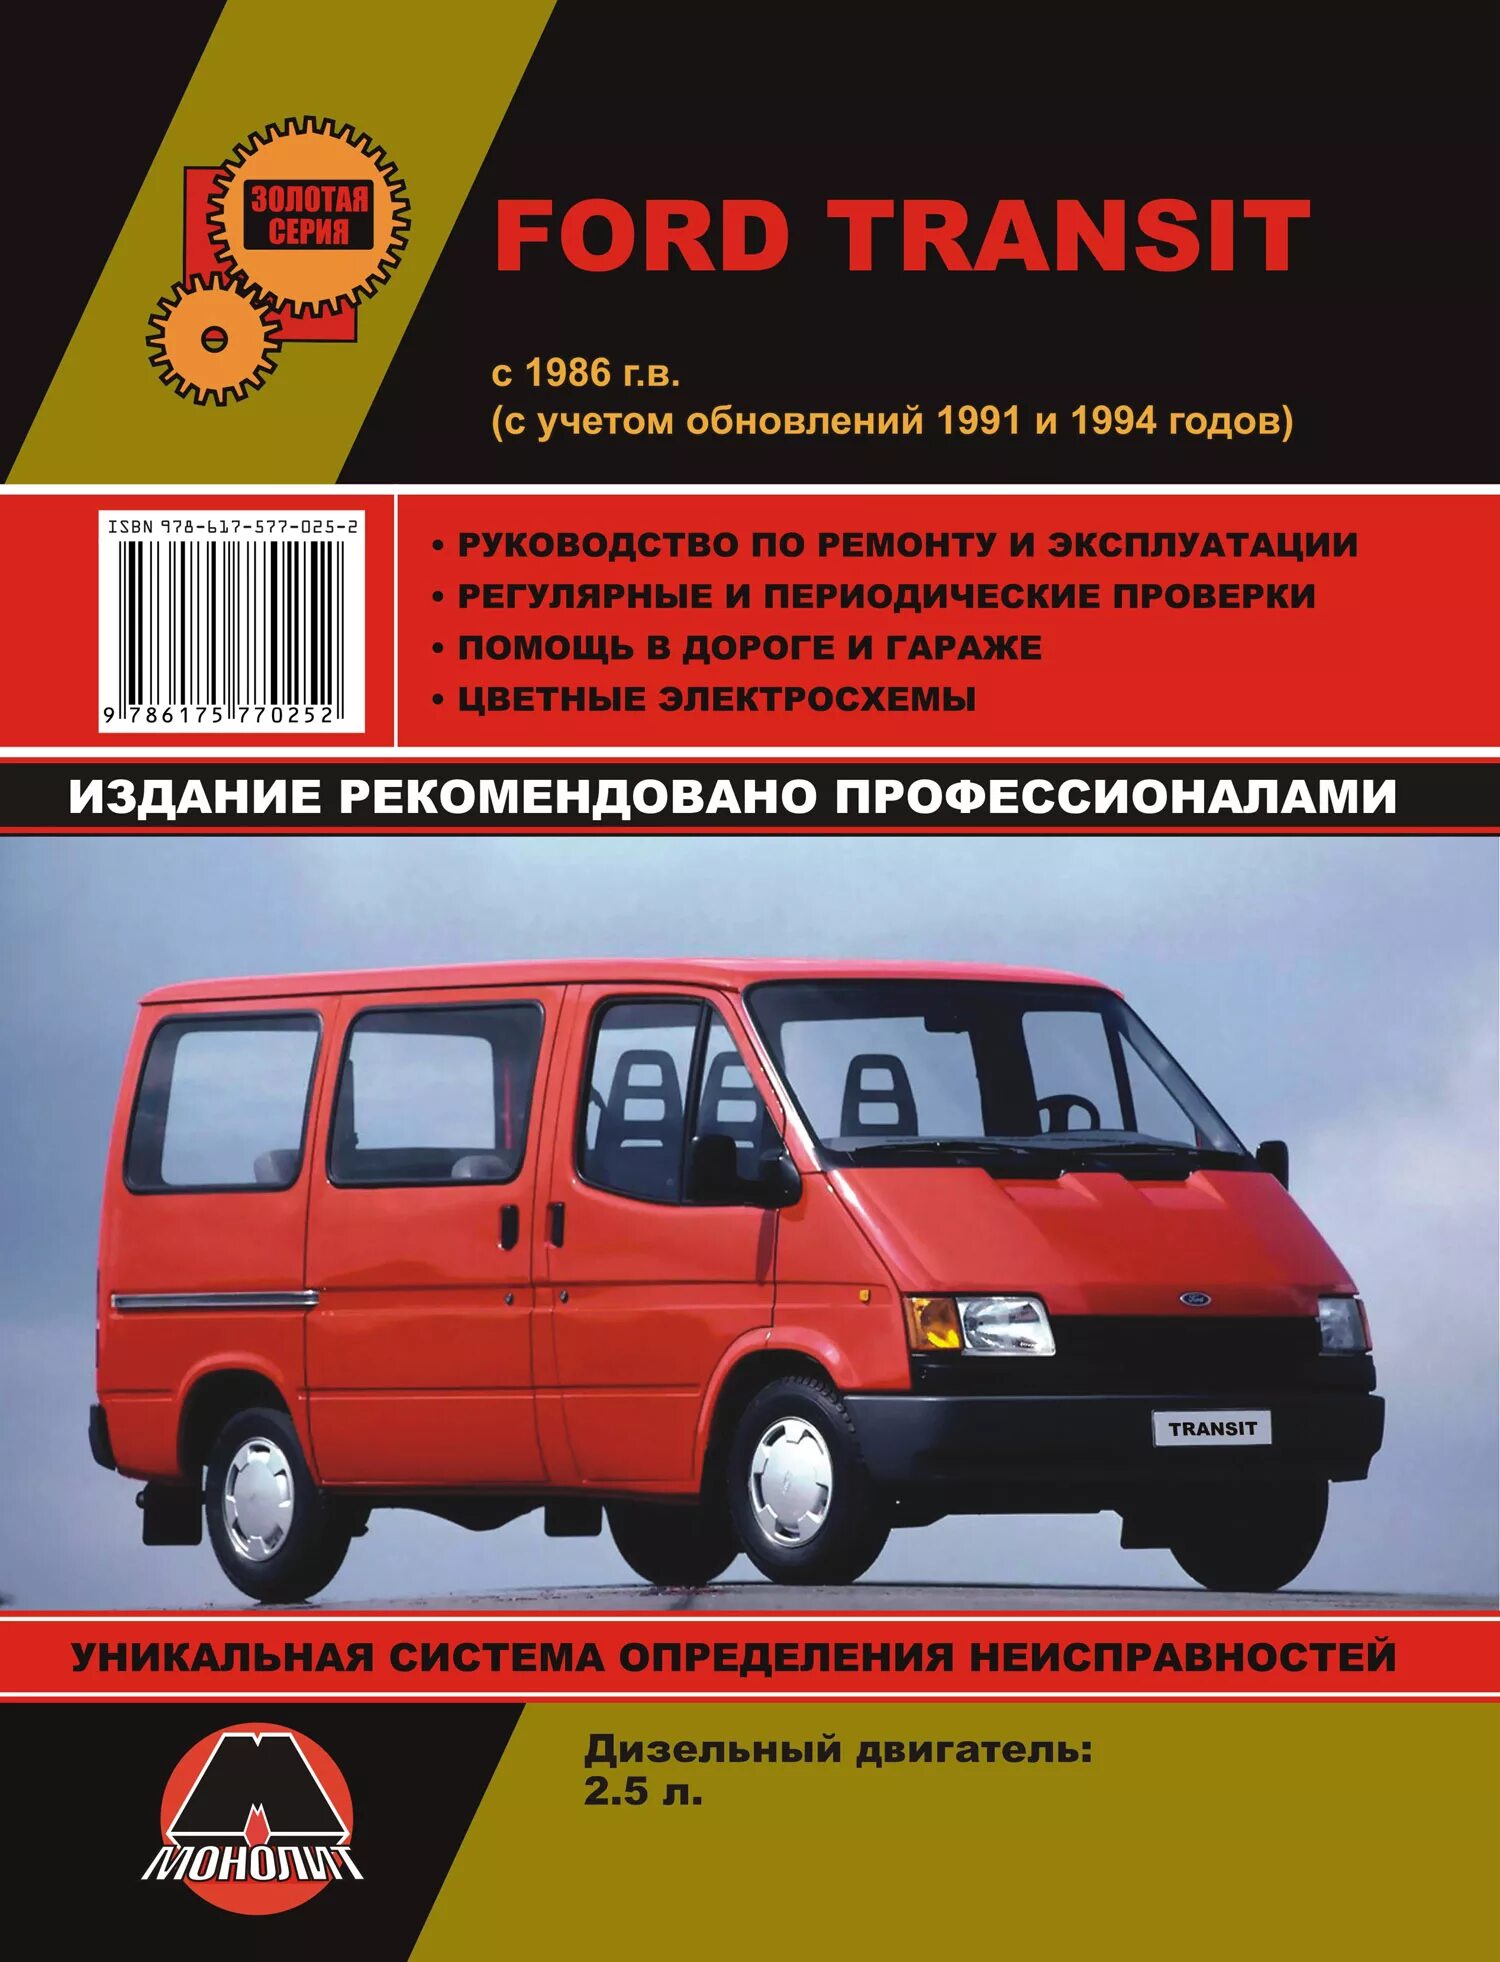 Ford Transit 1991-1994 мануал. Ford 2.5 Transit дизель 1986. Автолитература Форд Транзит 2006. Форд Транзит 1986-1991.